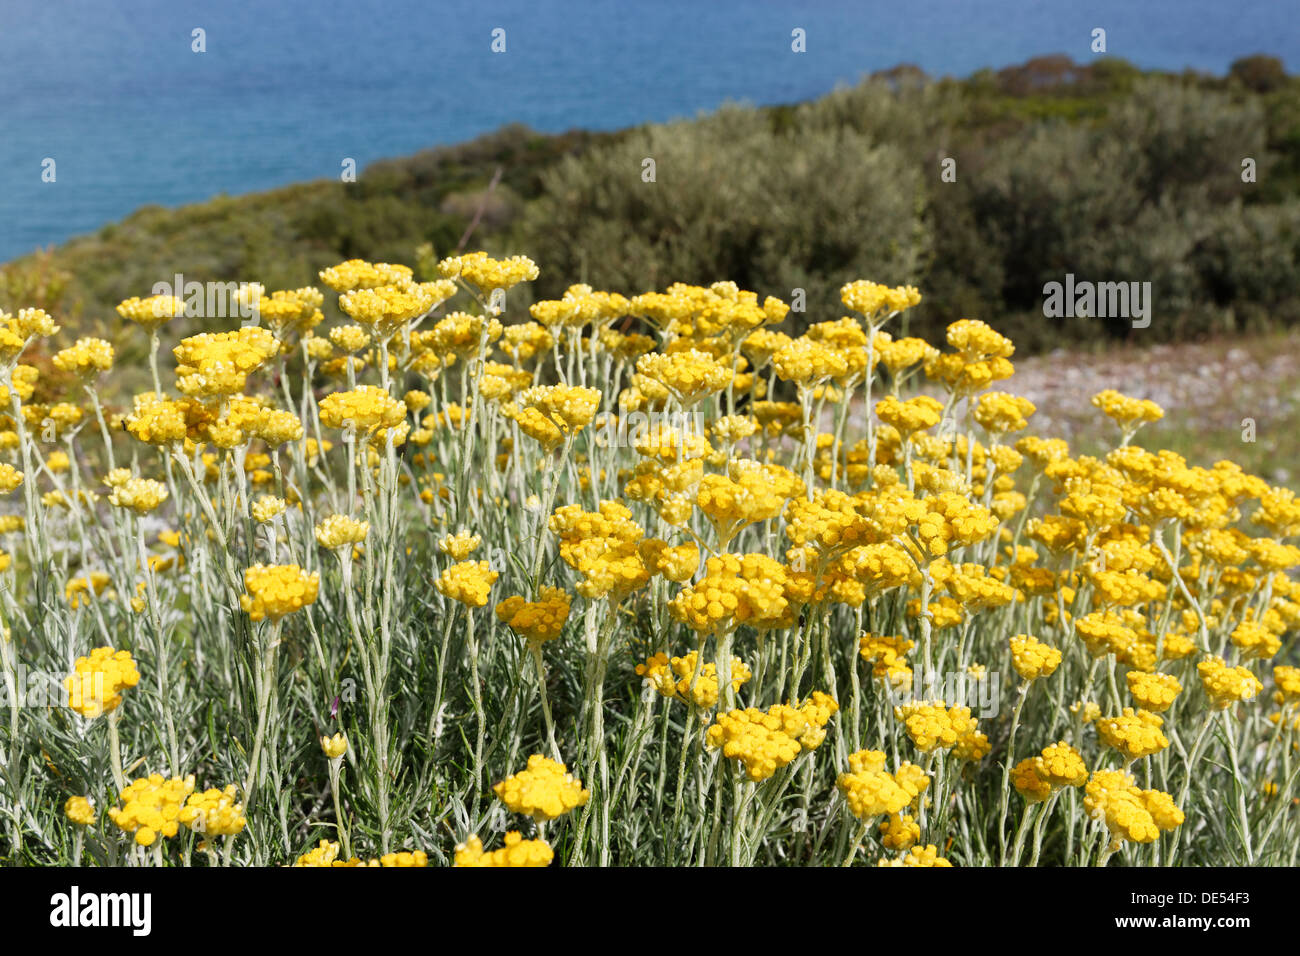 Flowering Curry Plant (Helichrysum italicum), Dilek National Park, Kuşadası, Aydin province, Aegean region, Turkey Stock Photo